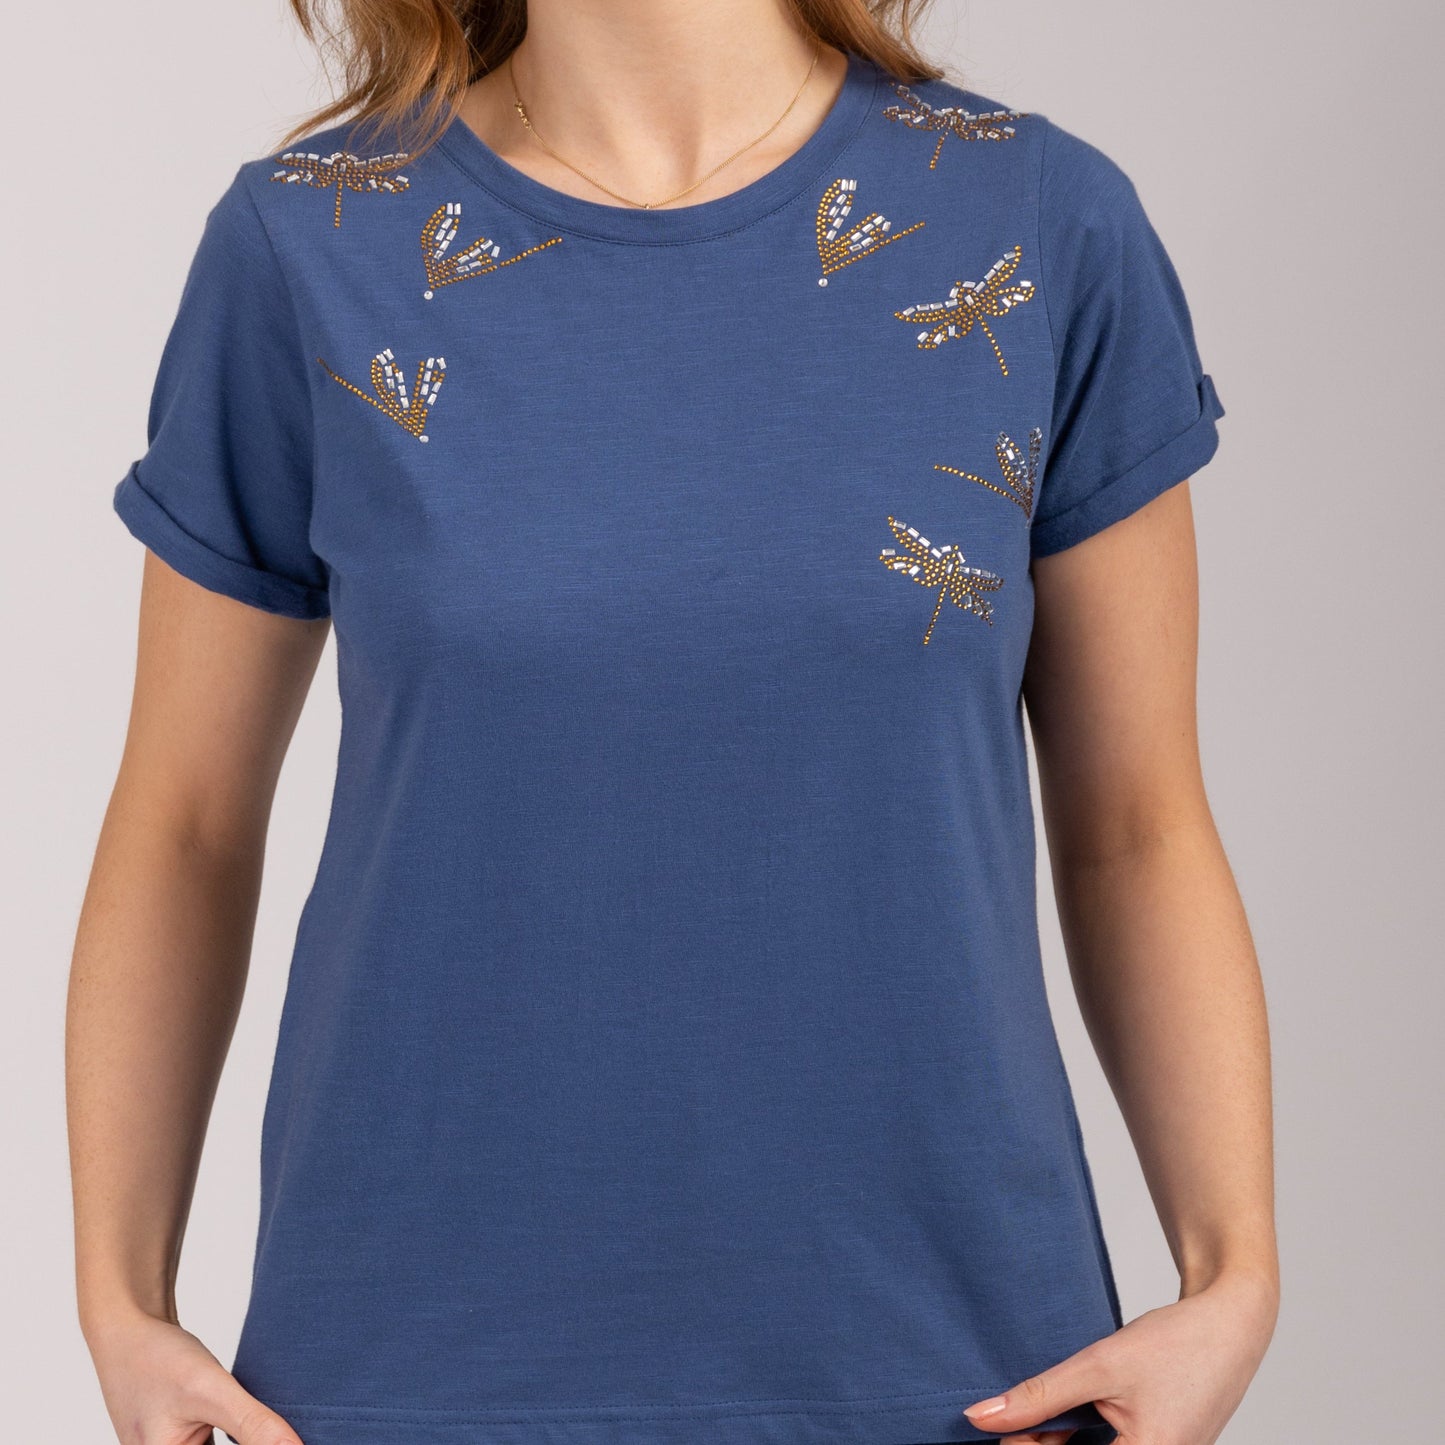 Mudflower Diamante Dragonfly T Shirt